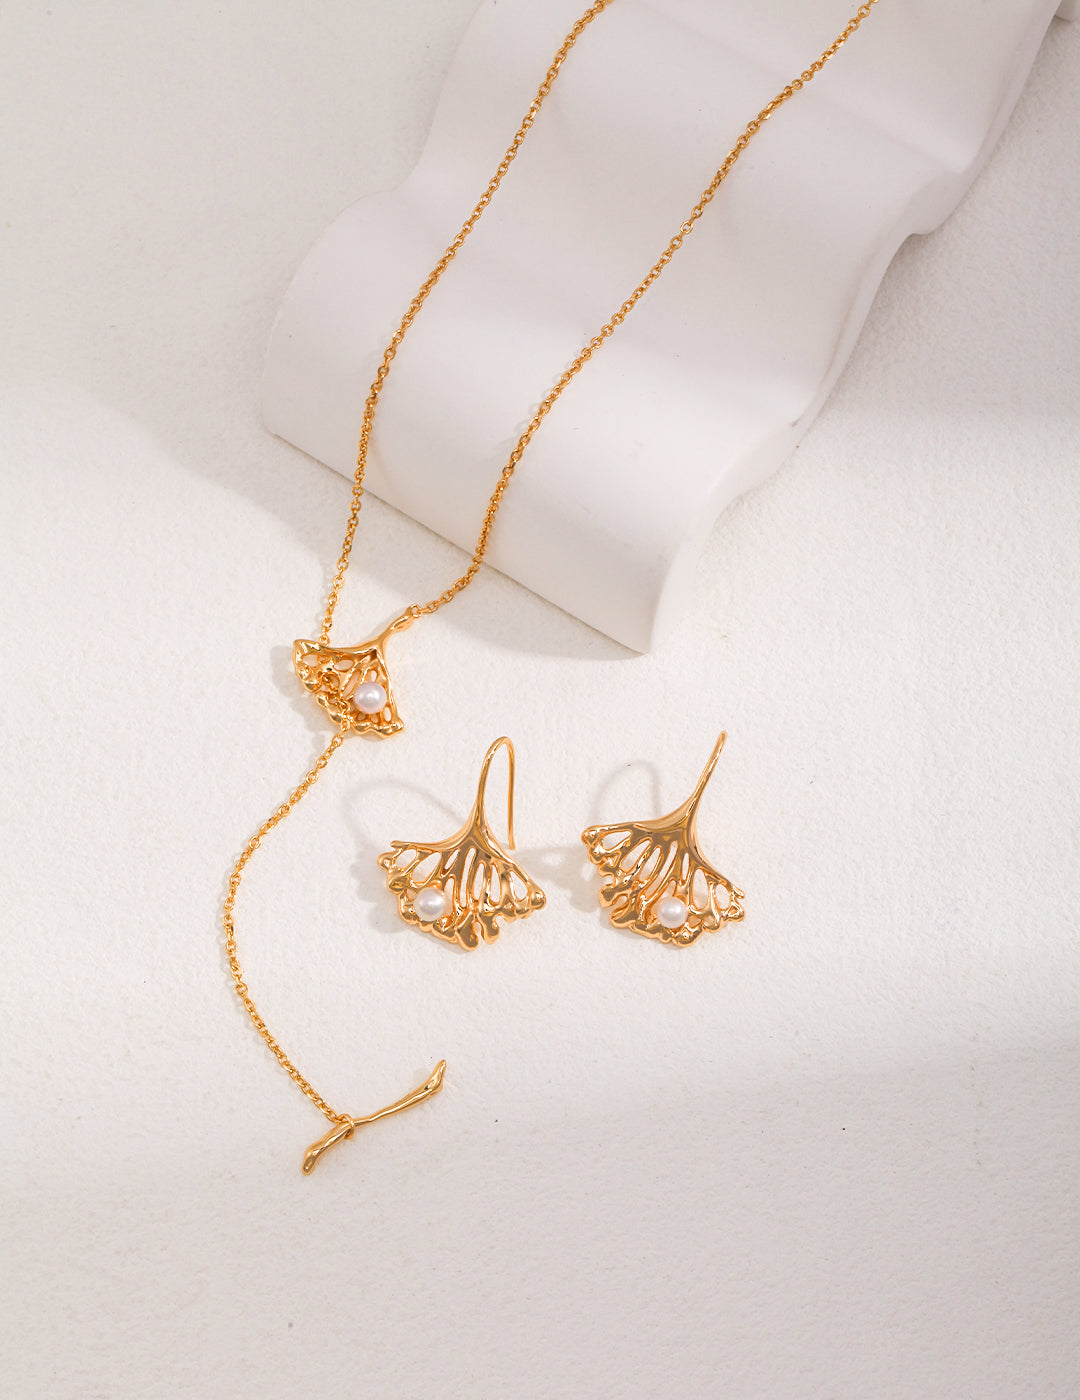 Elegant Ginkgo Leaf Drop Necklace with Single Pearl by Señorita J